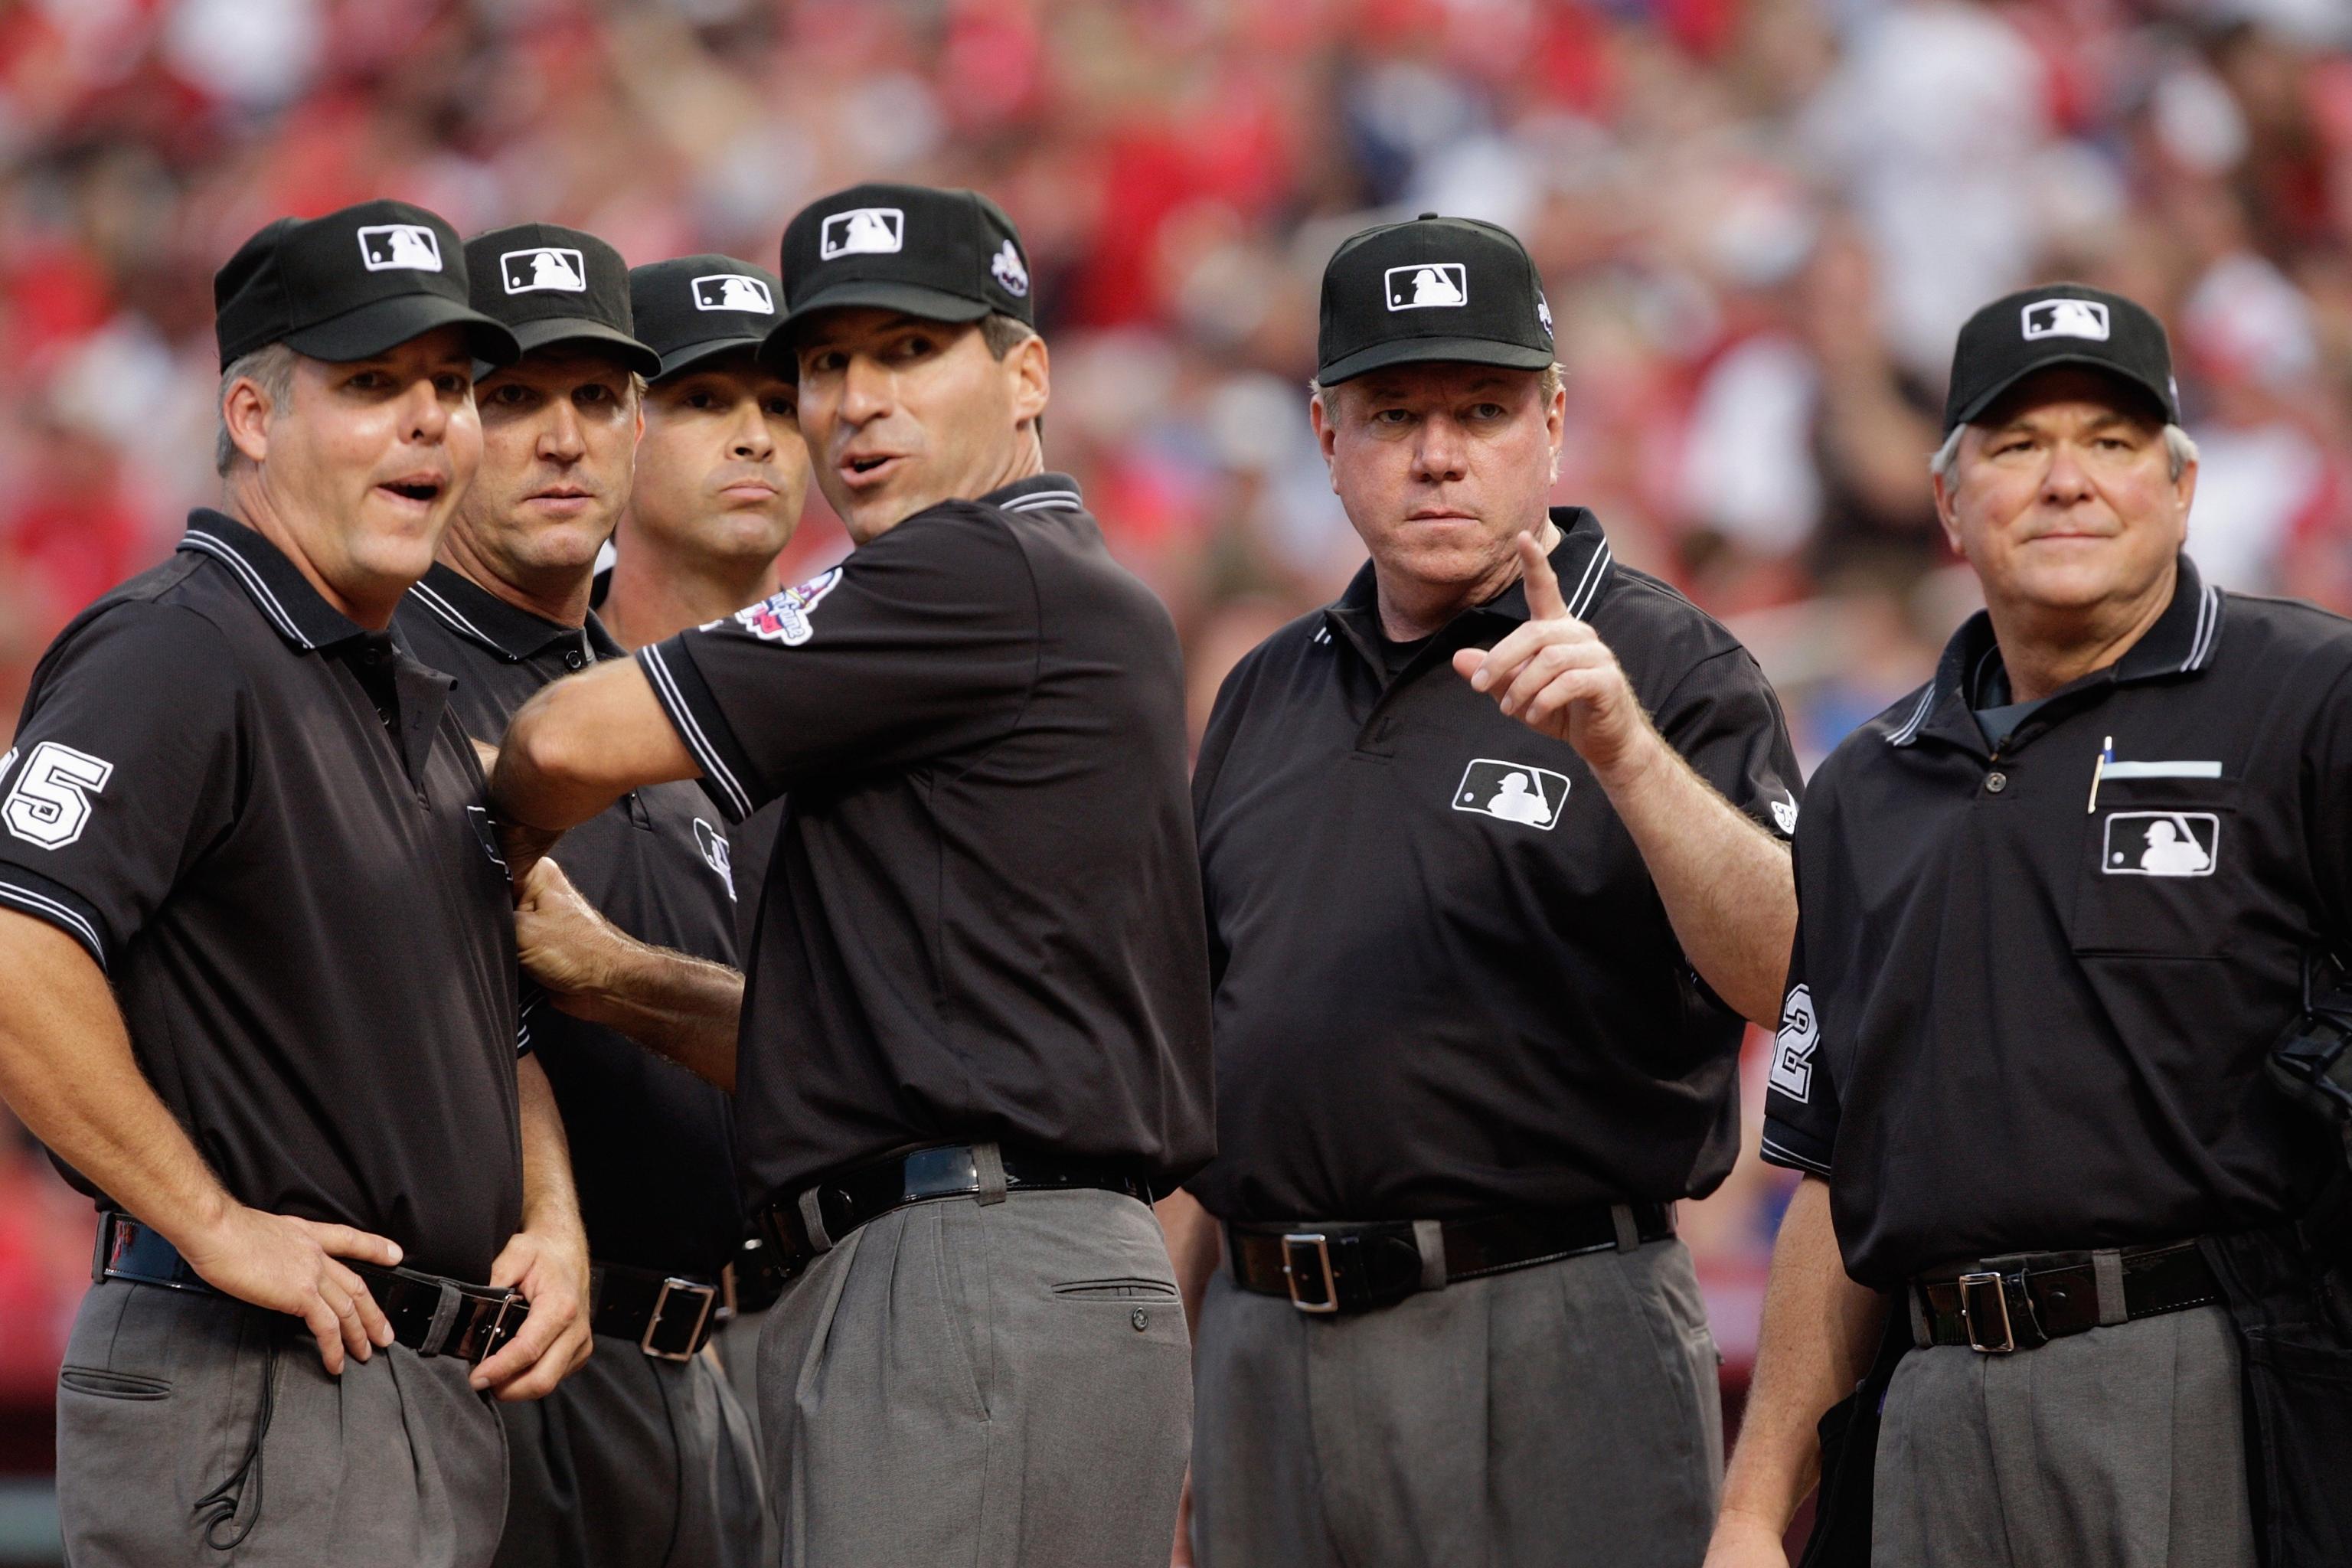 Close Call Sports & Umpire Ejection Fantasy League: MLB Debuts